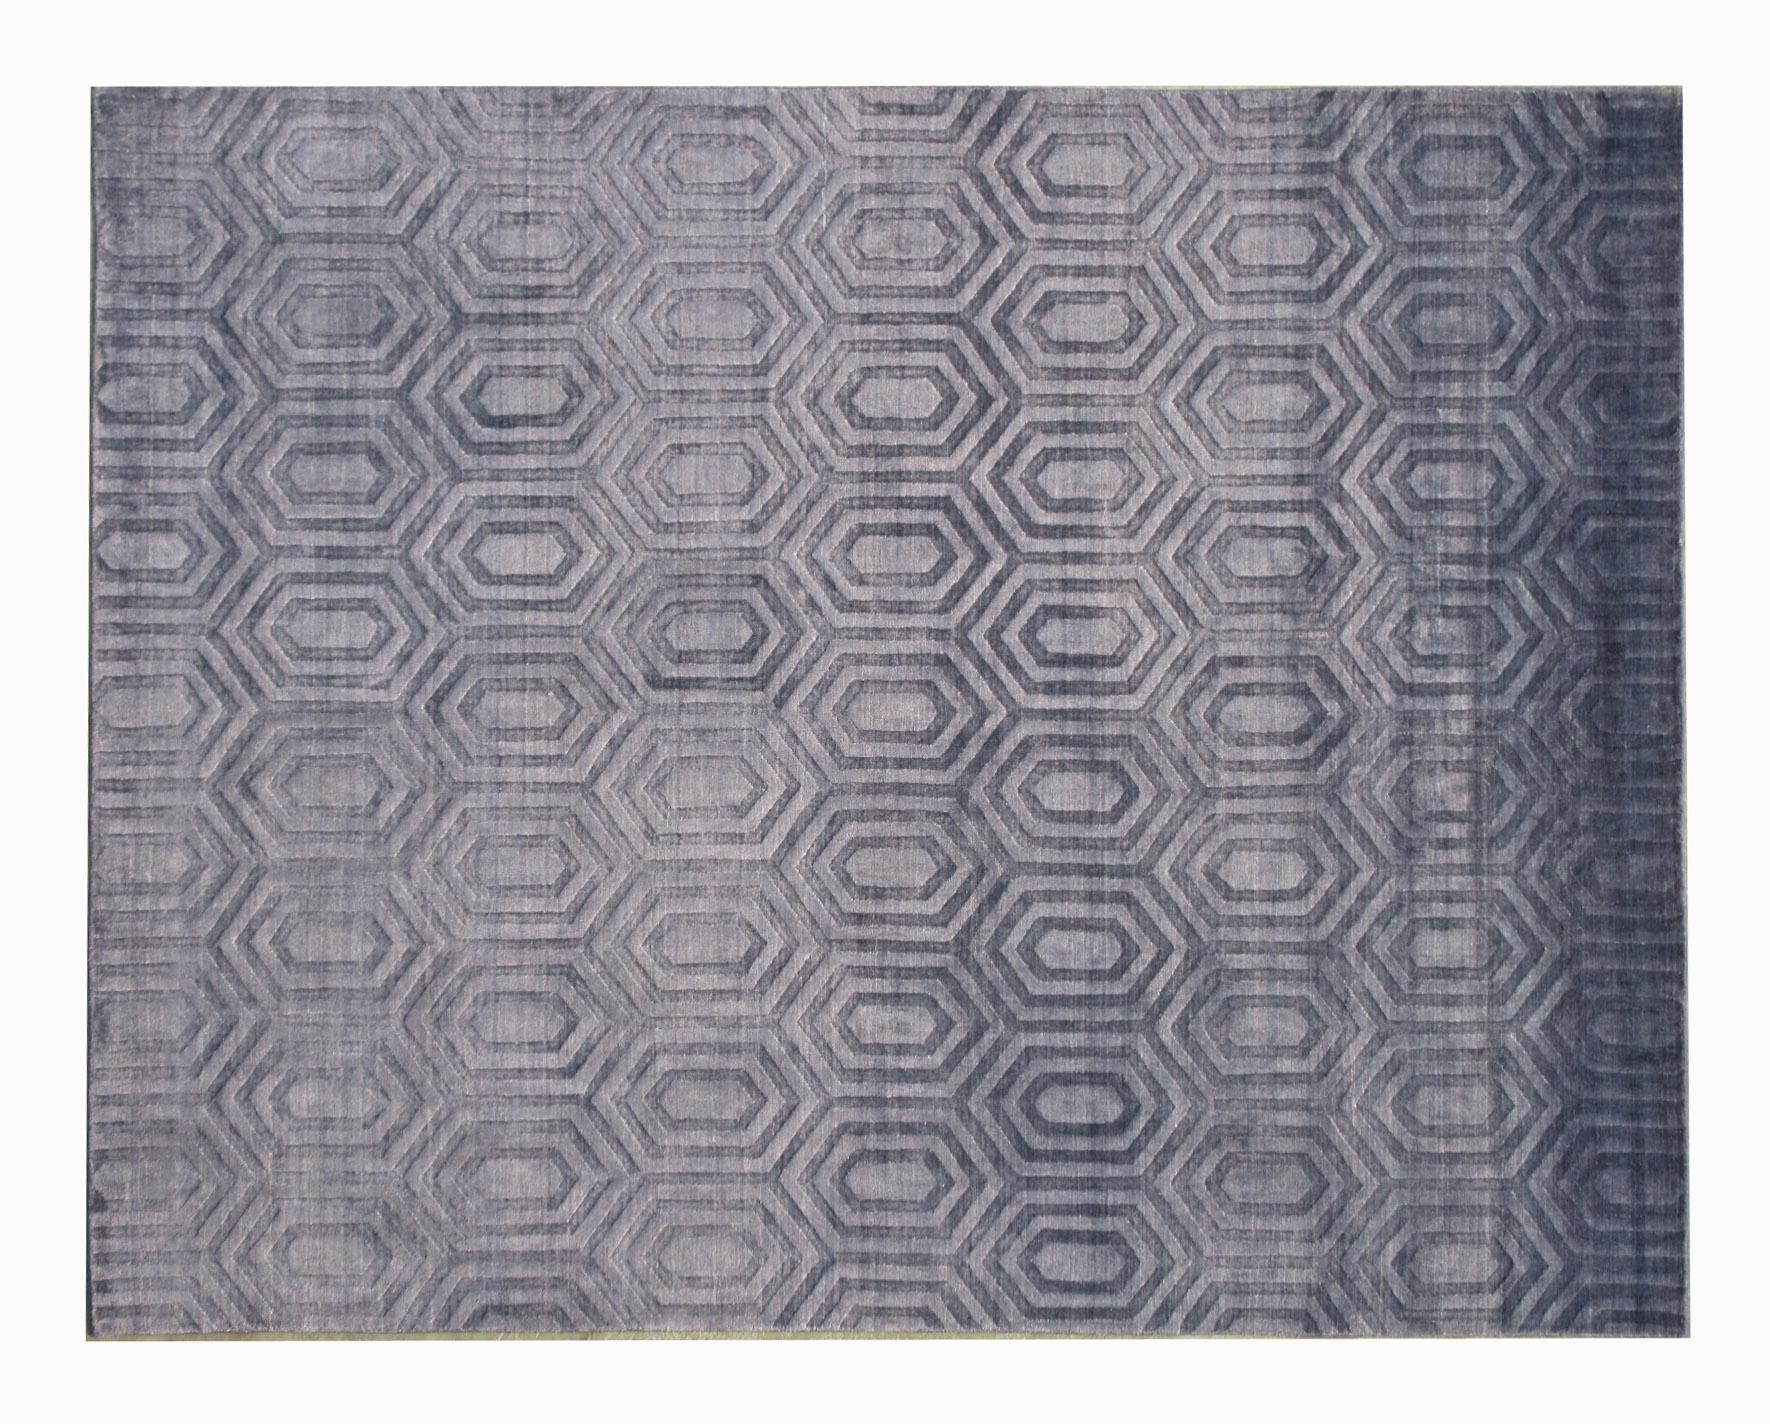 Handmade silk pile on a cotton foundation.

Modern hexagonal geometric design.

Dimensions: 8' x 9'10